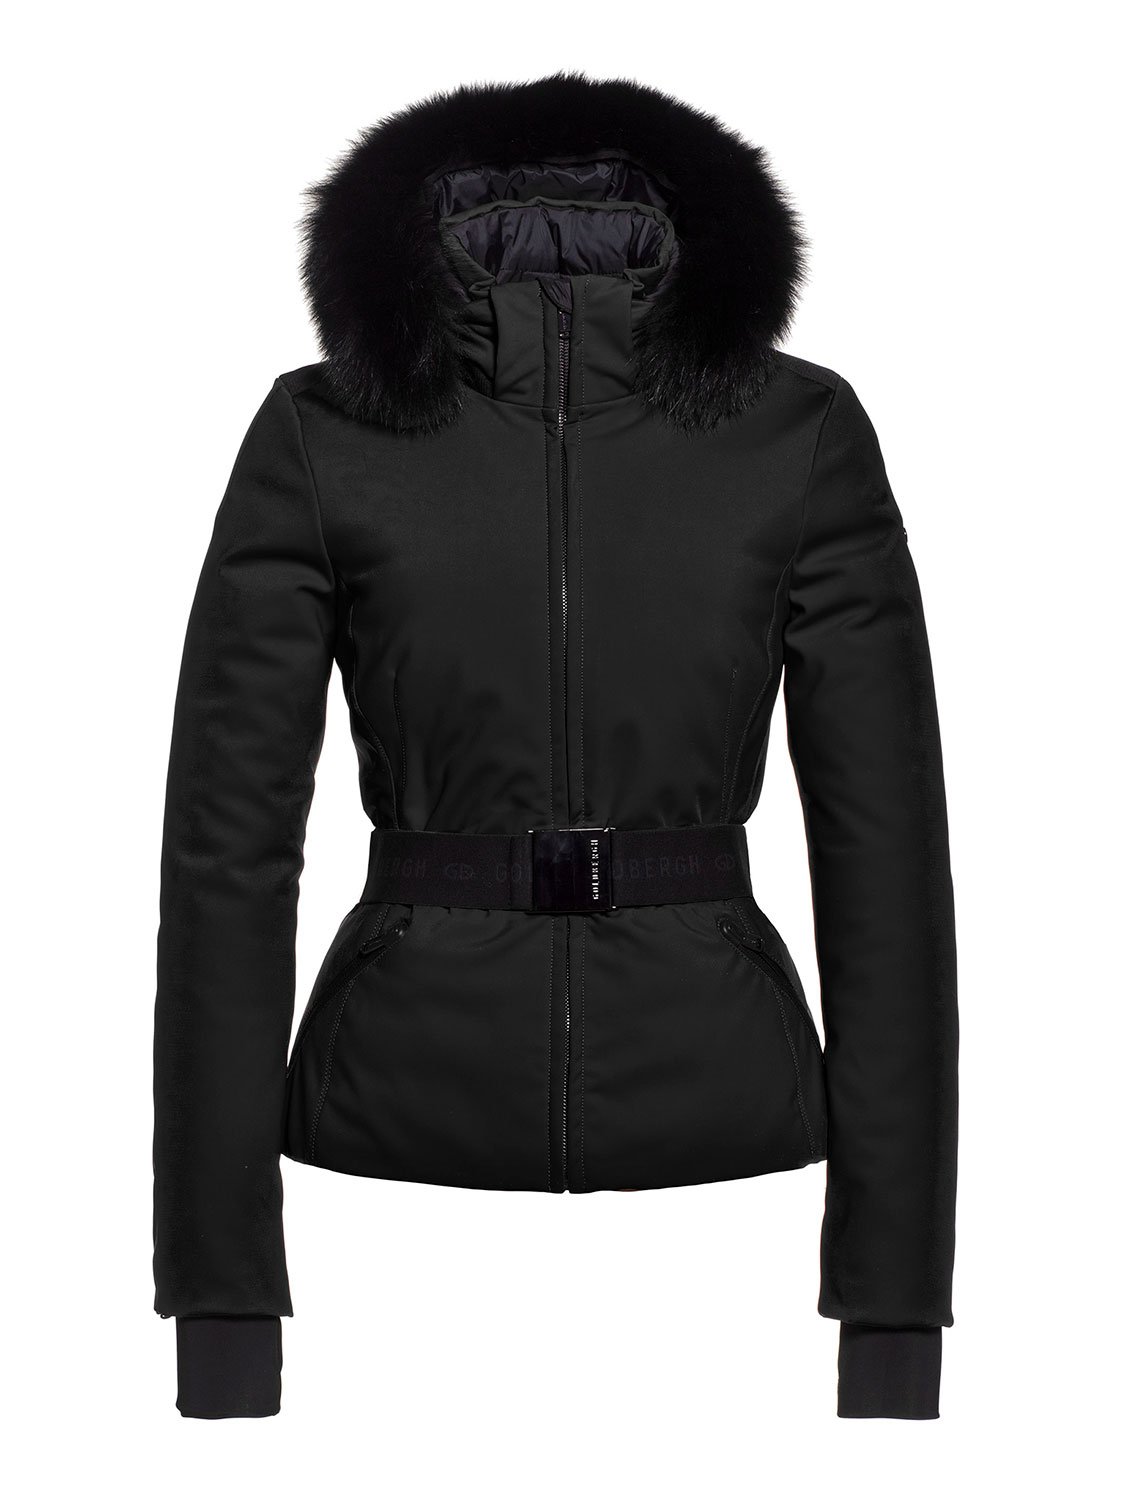 Goldbergh Hida Black Ski Jacket with Fur Trim | Winternational